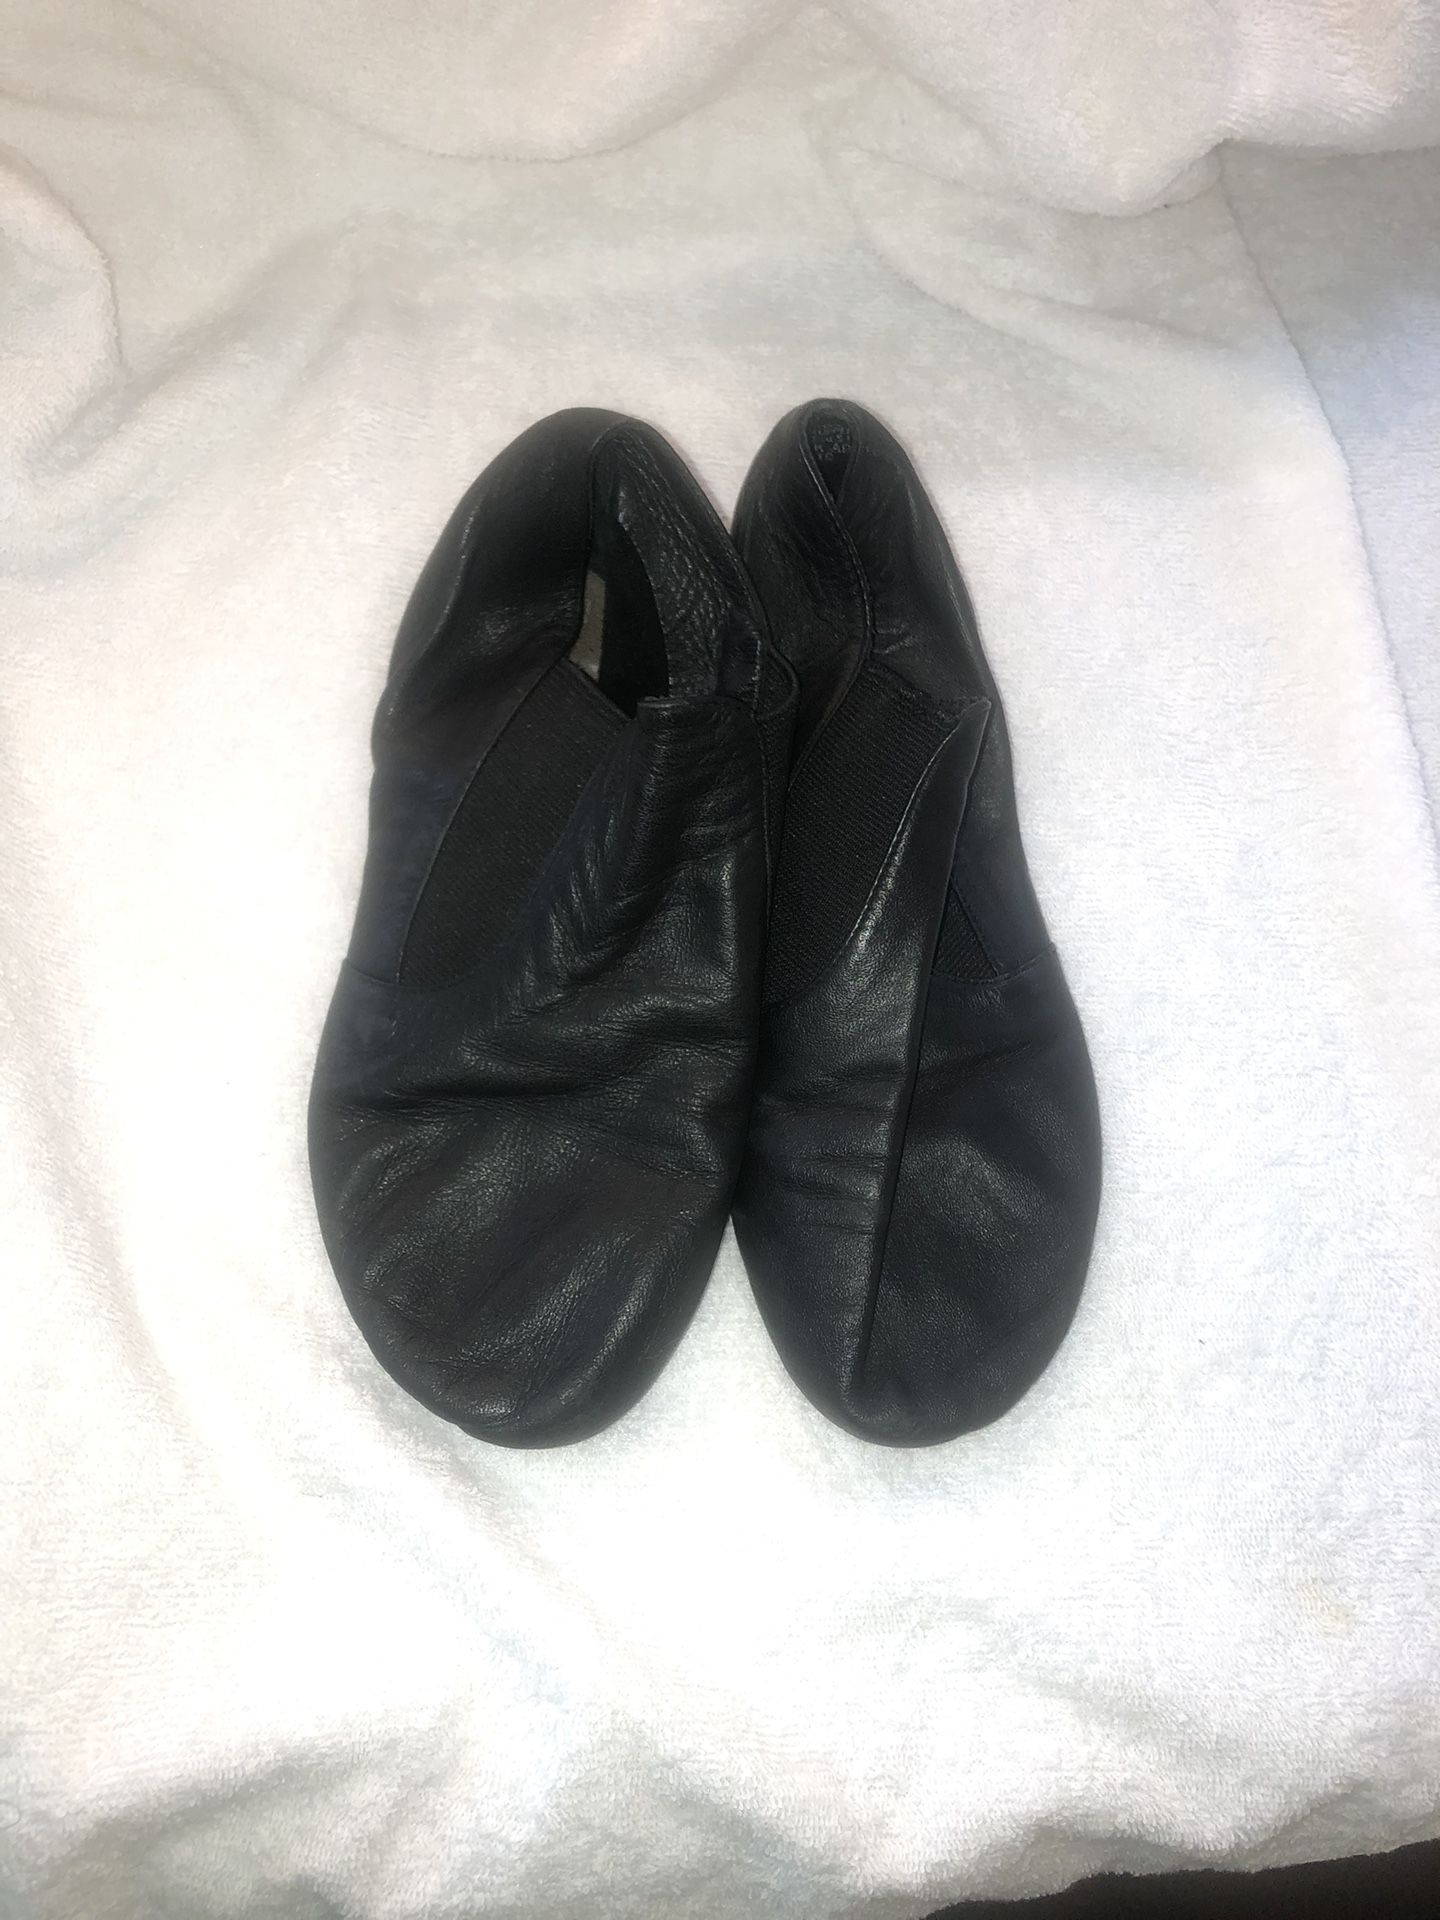 Capezio dance shoe 8.5” toe to heel UNISEX fits like ladies size 6